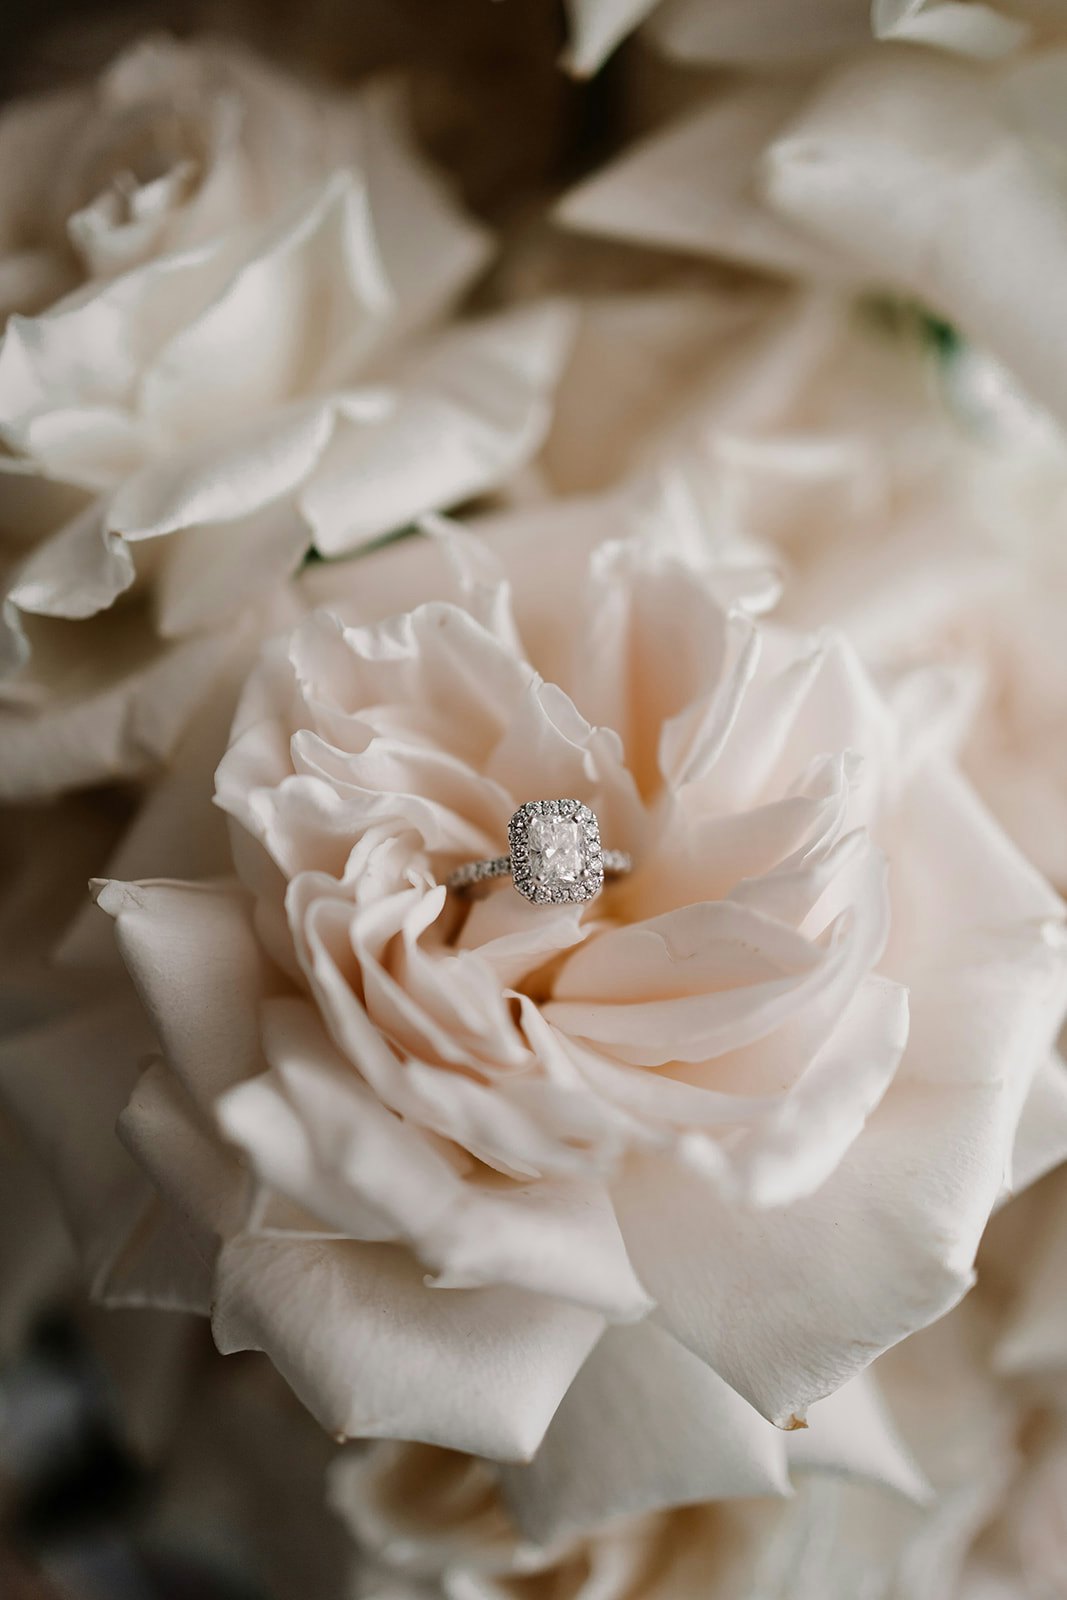 Wedding ring in flowers